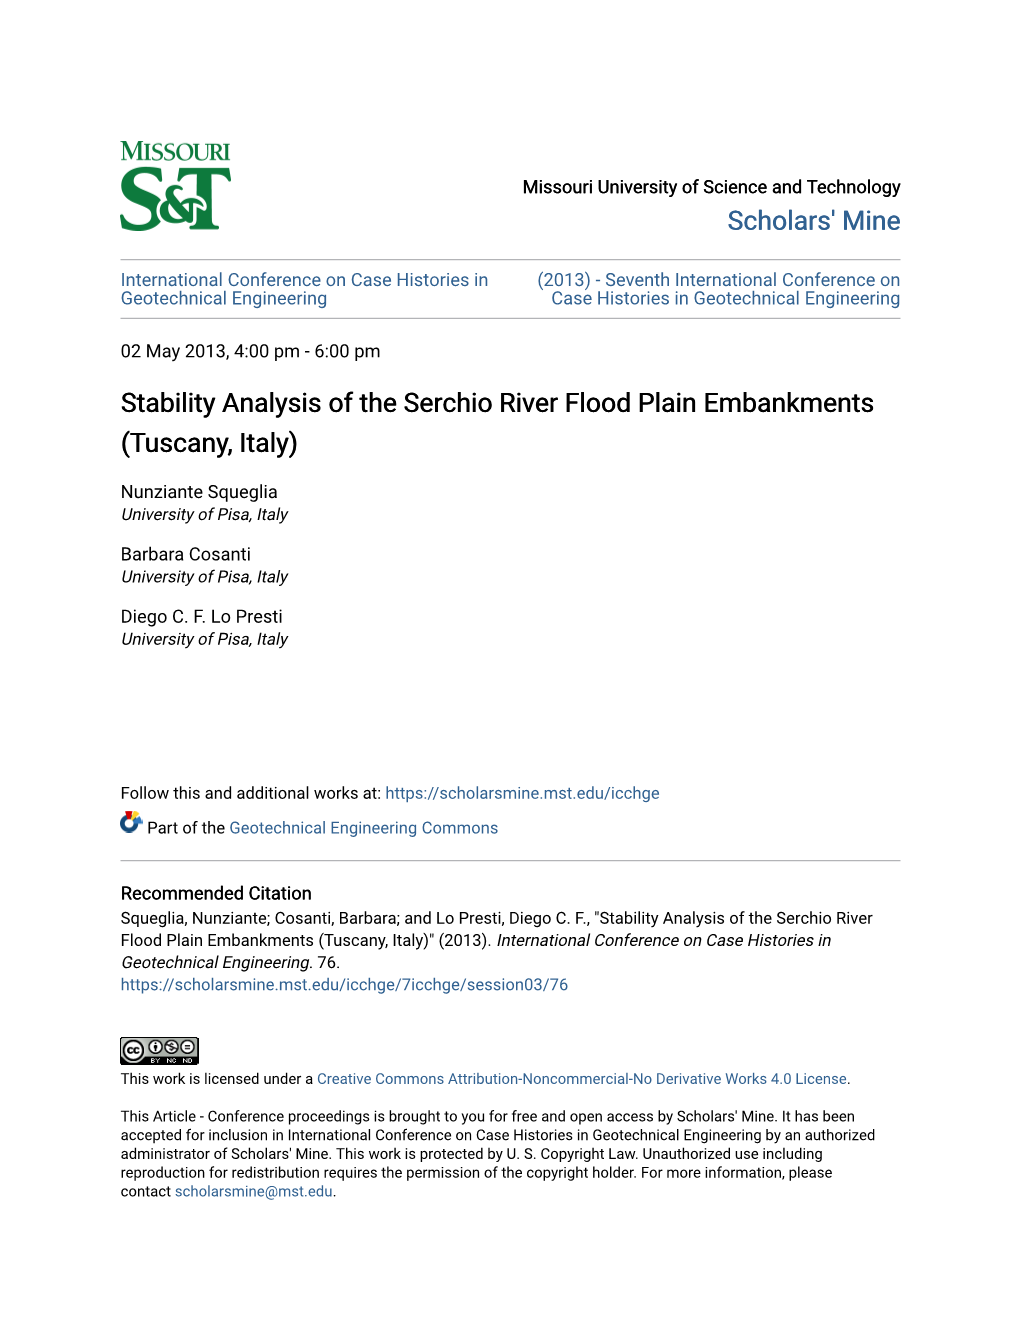 Stability Analysis of the Serchio River Flood Plain Embankments (Tuscany, Italy)